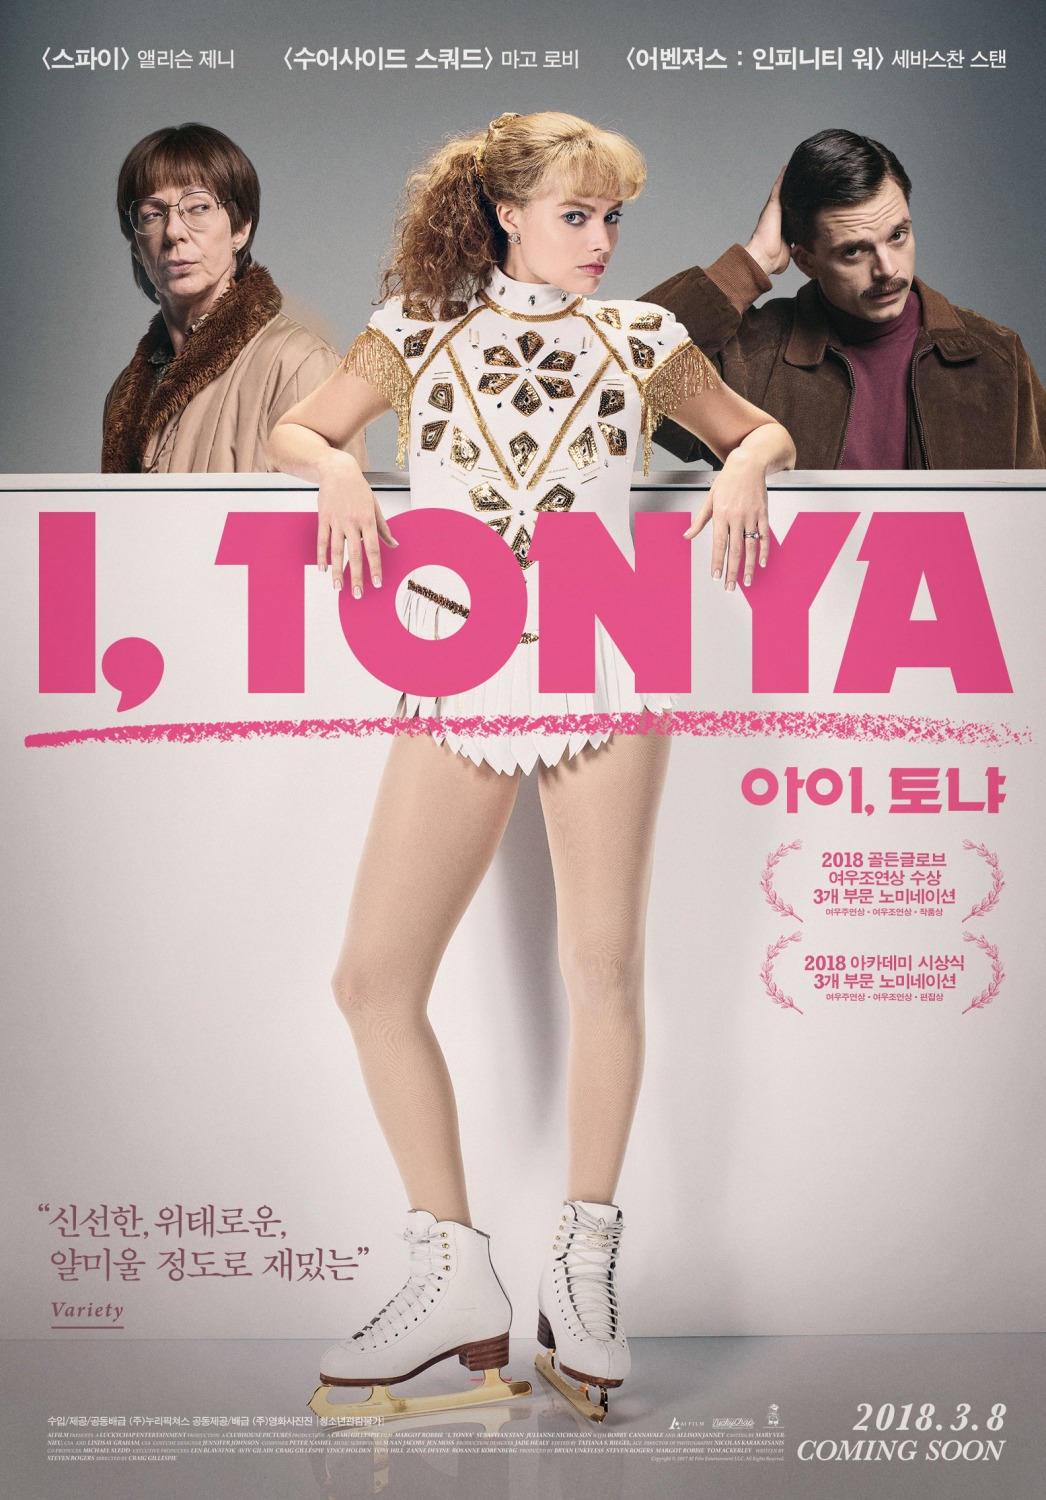 Extra Large Movie Poster Image for I, Tonya (#5 of 5)